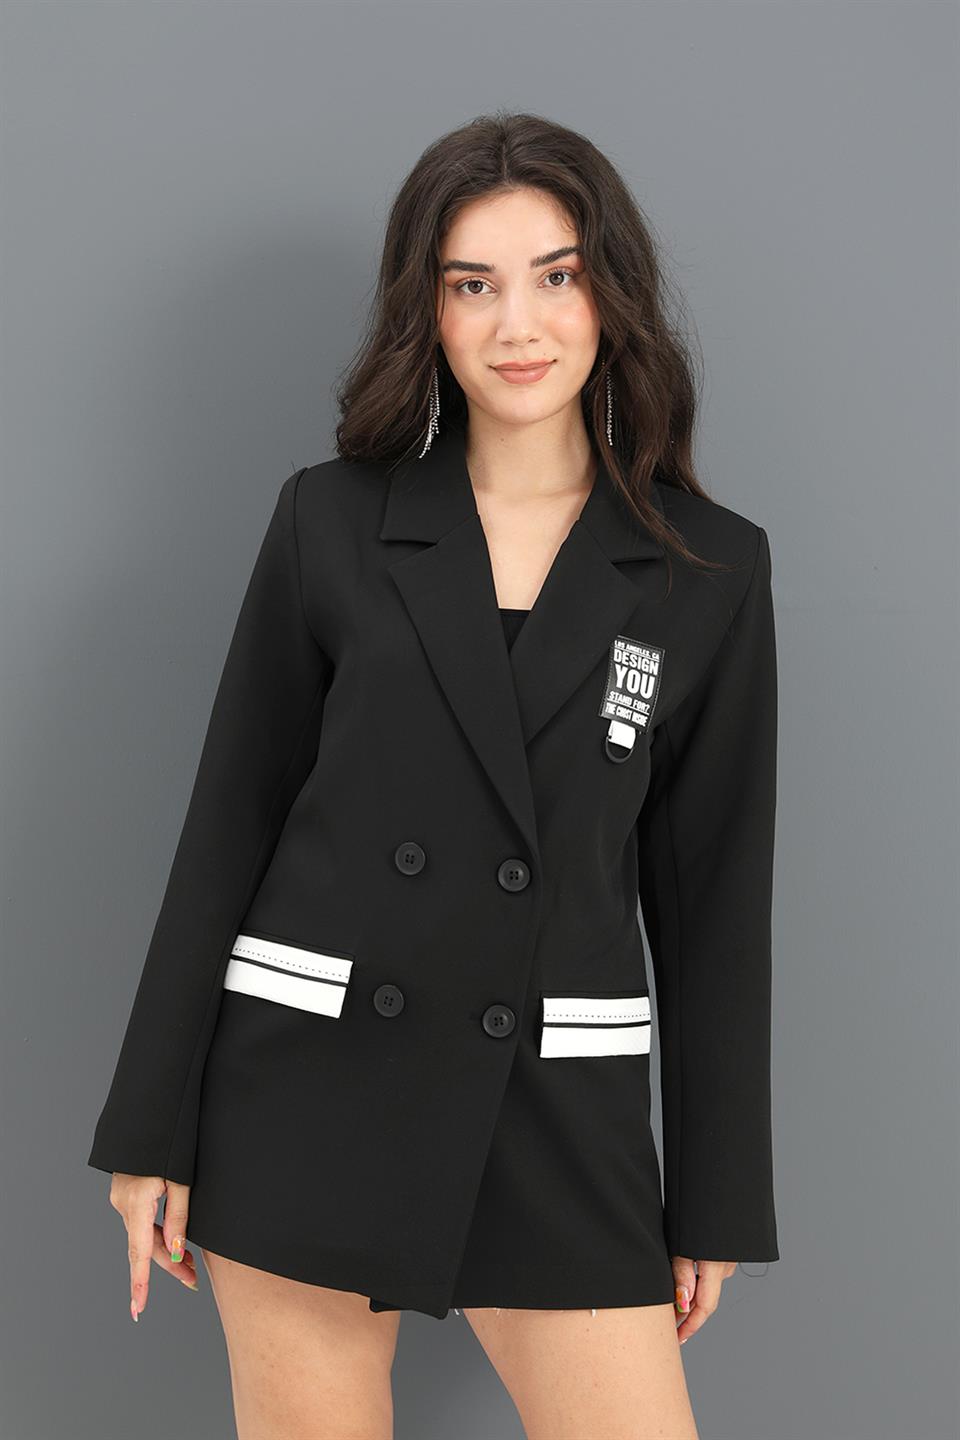 Women's Jacket Pocket Cover Garnish Atlas Fabric - Black - STREET MODE ™